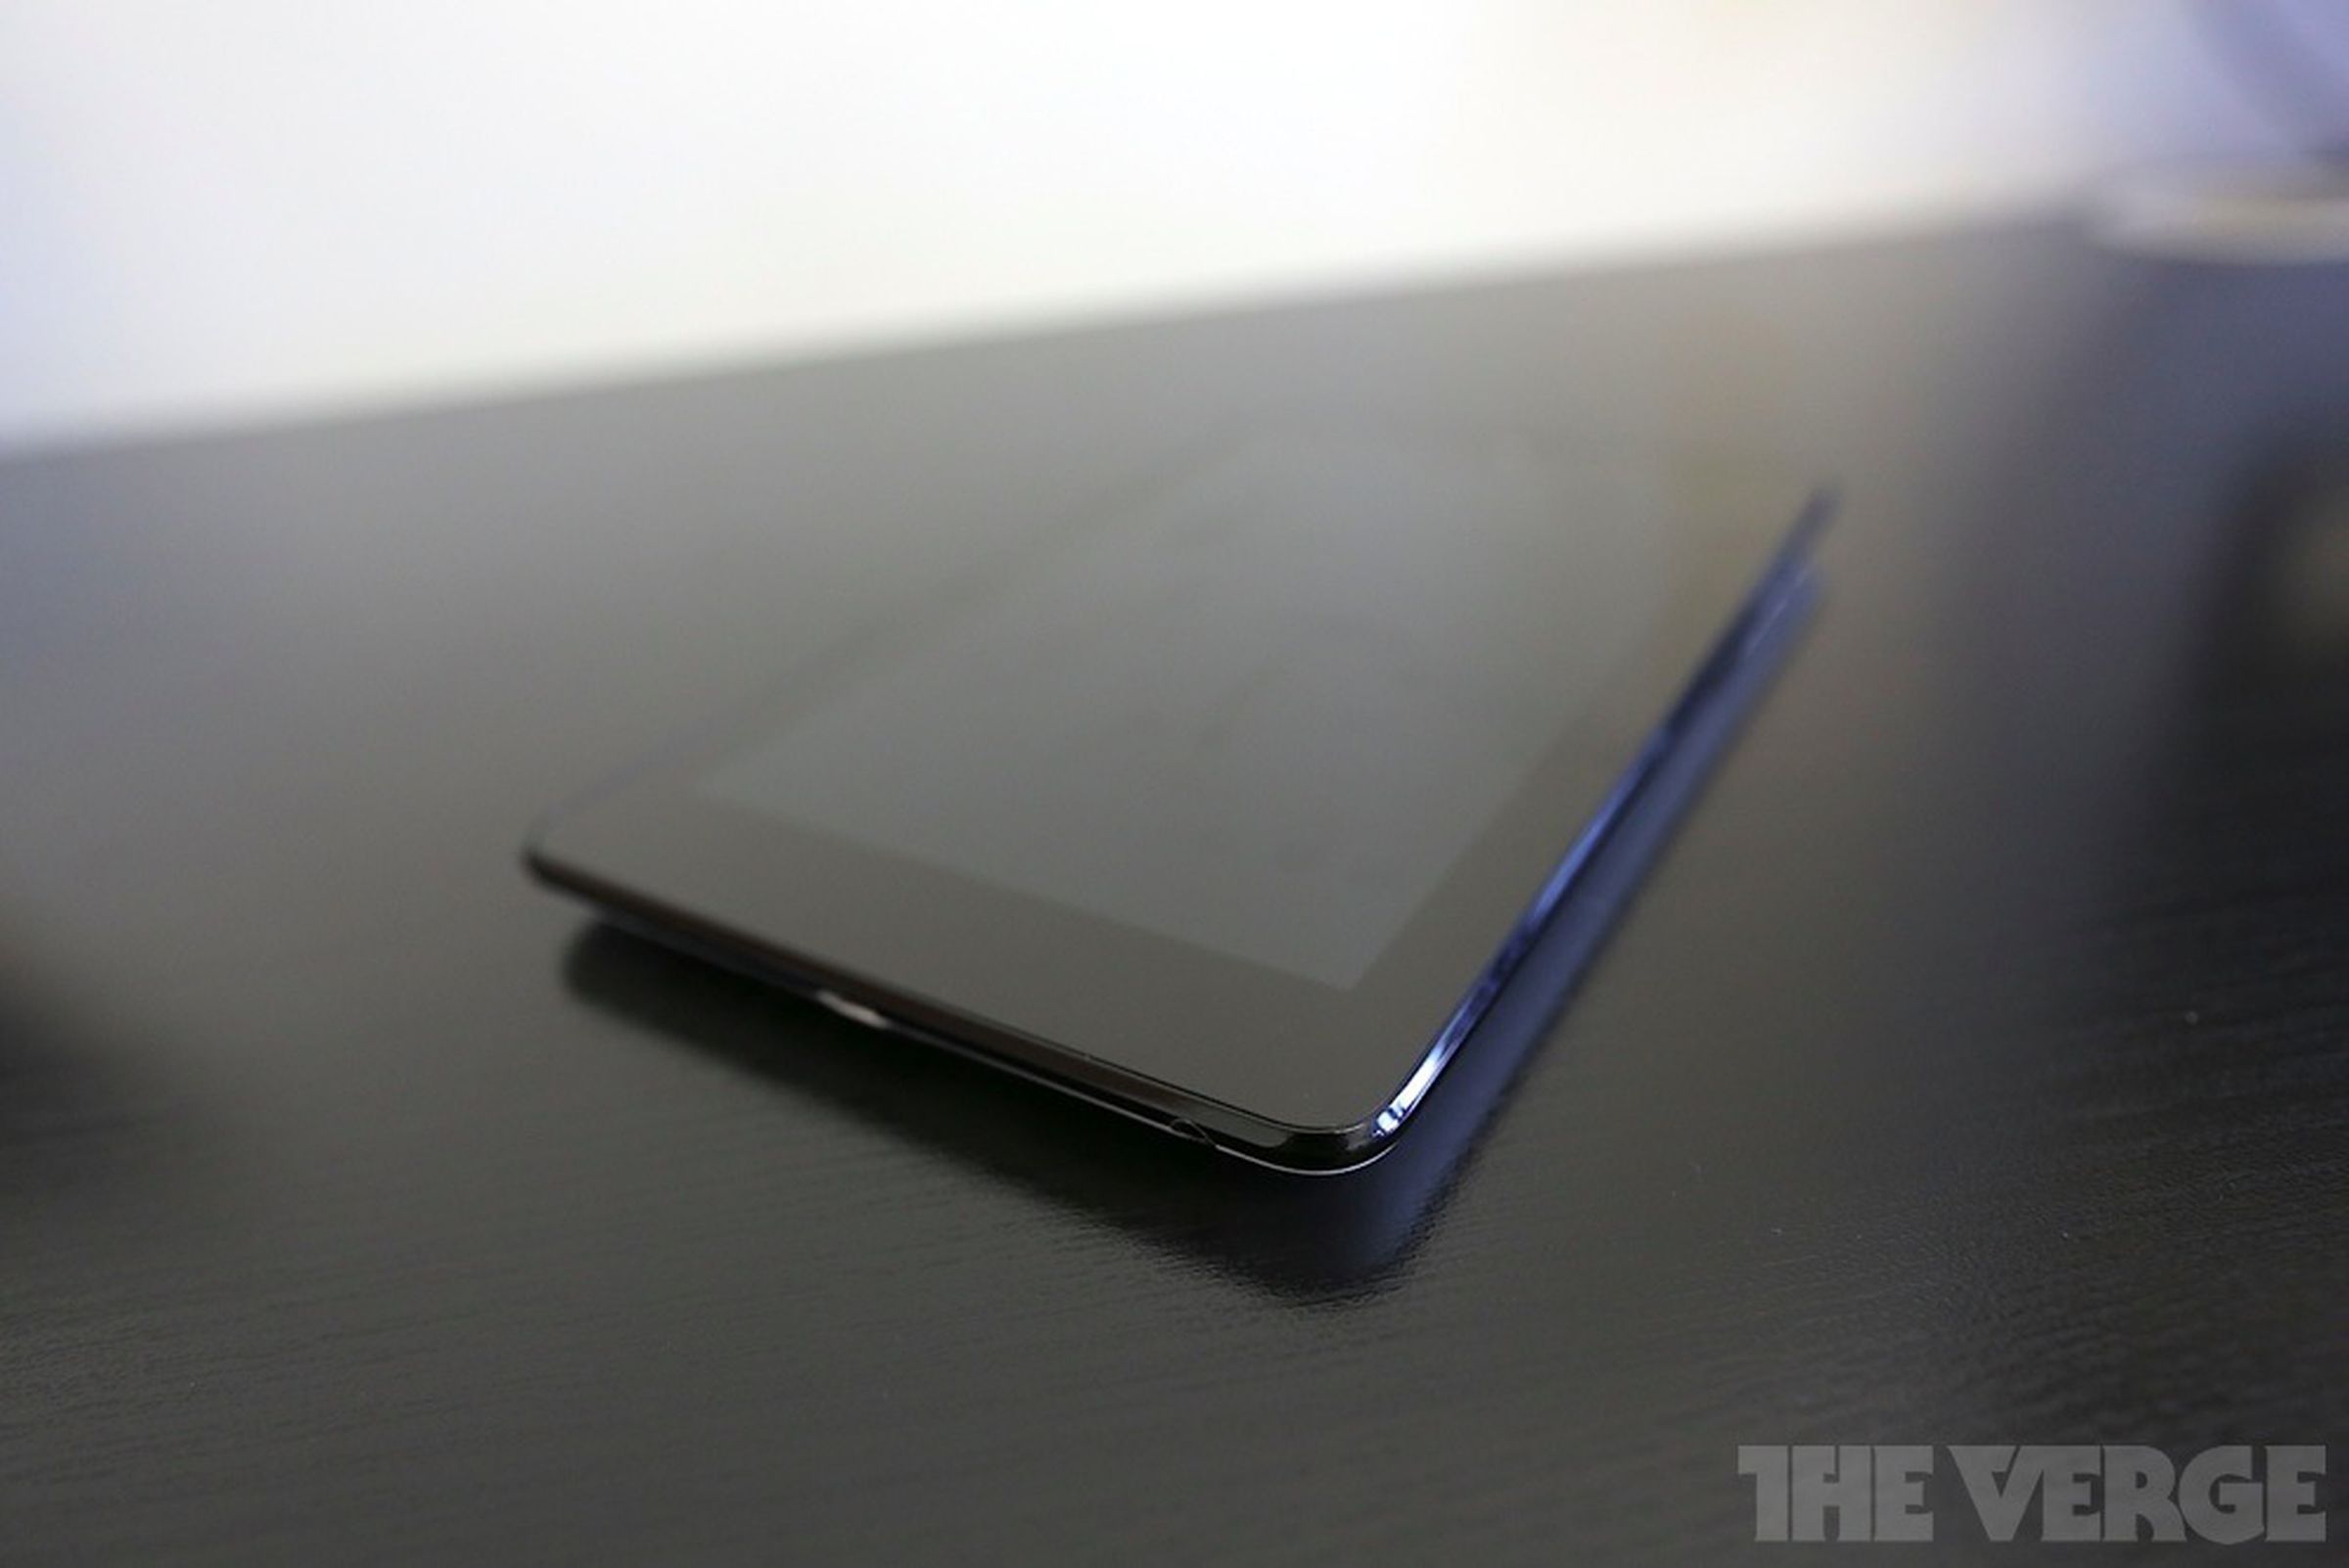 Special Google I/O edition Nexus 7 hands-on photos